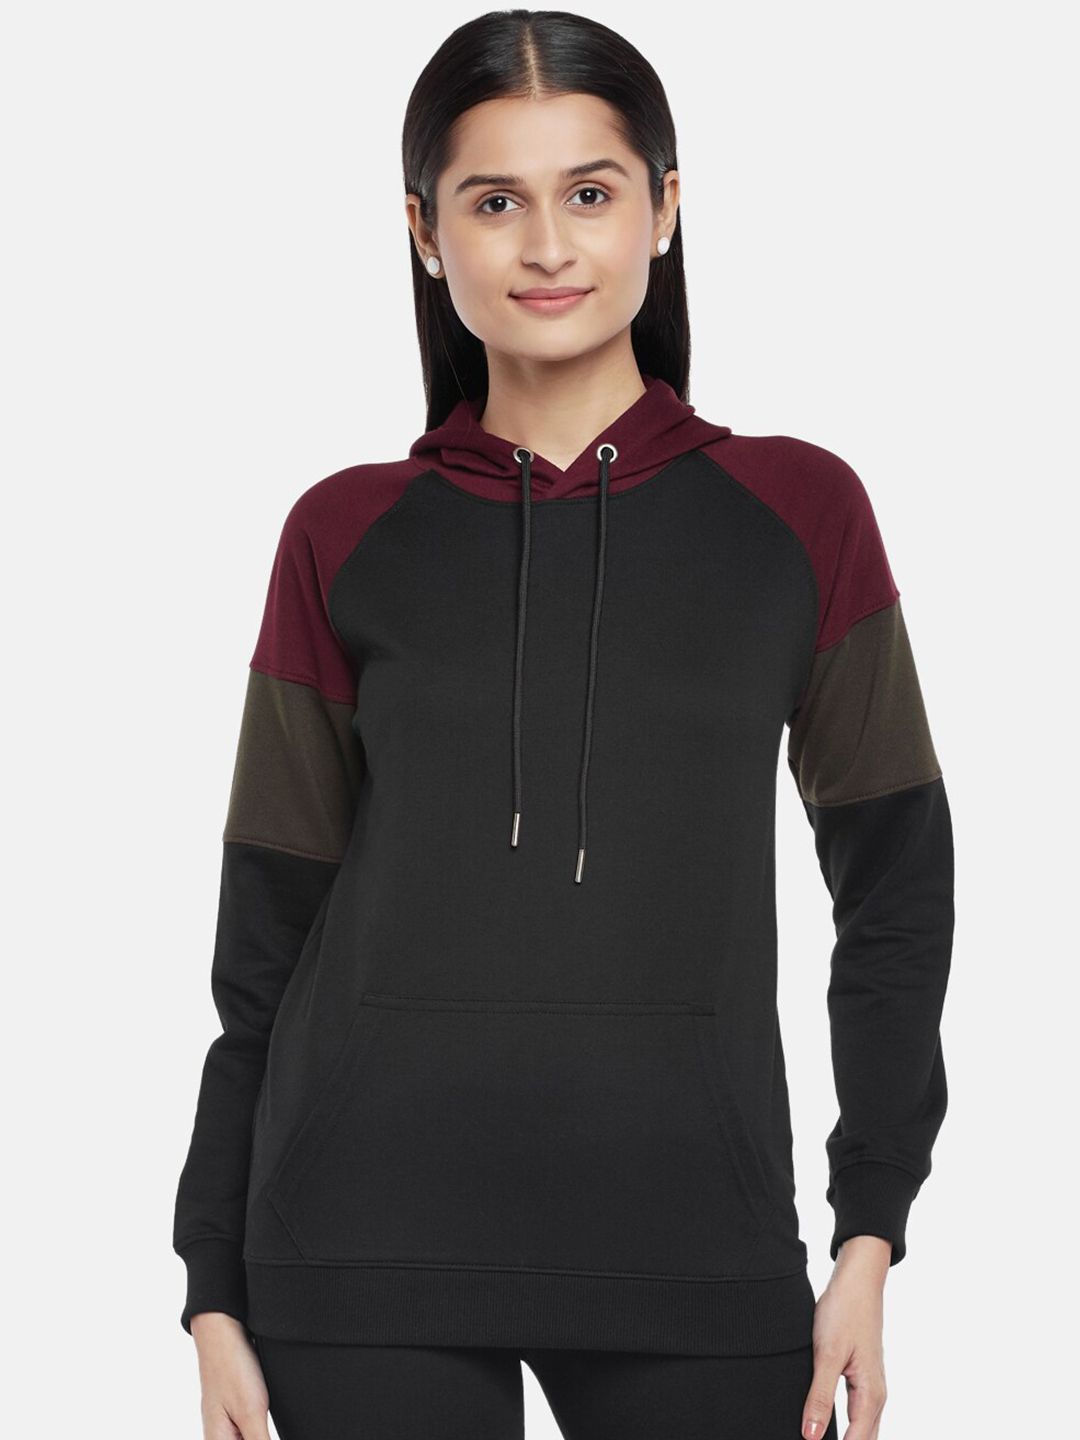 People Women Black & Maroon Colourblocked Hooded Sweatshirt Price in India